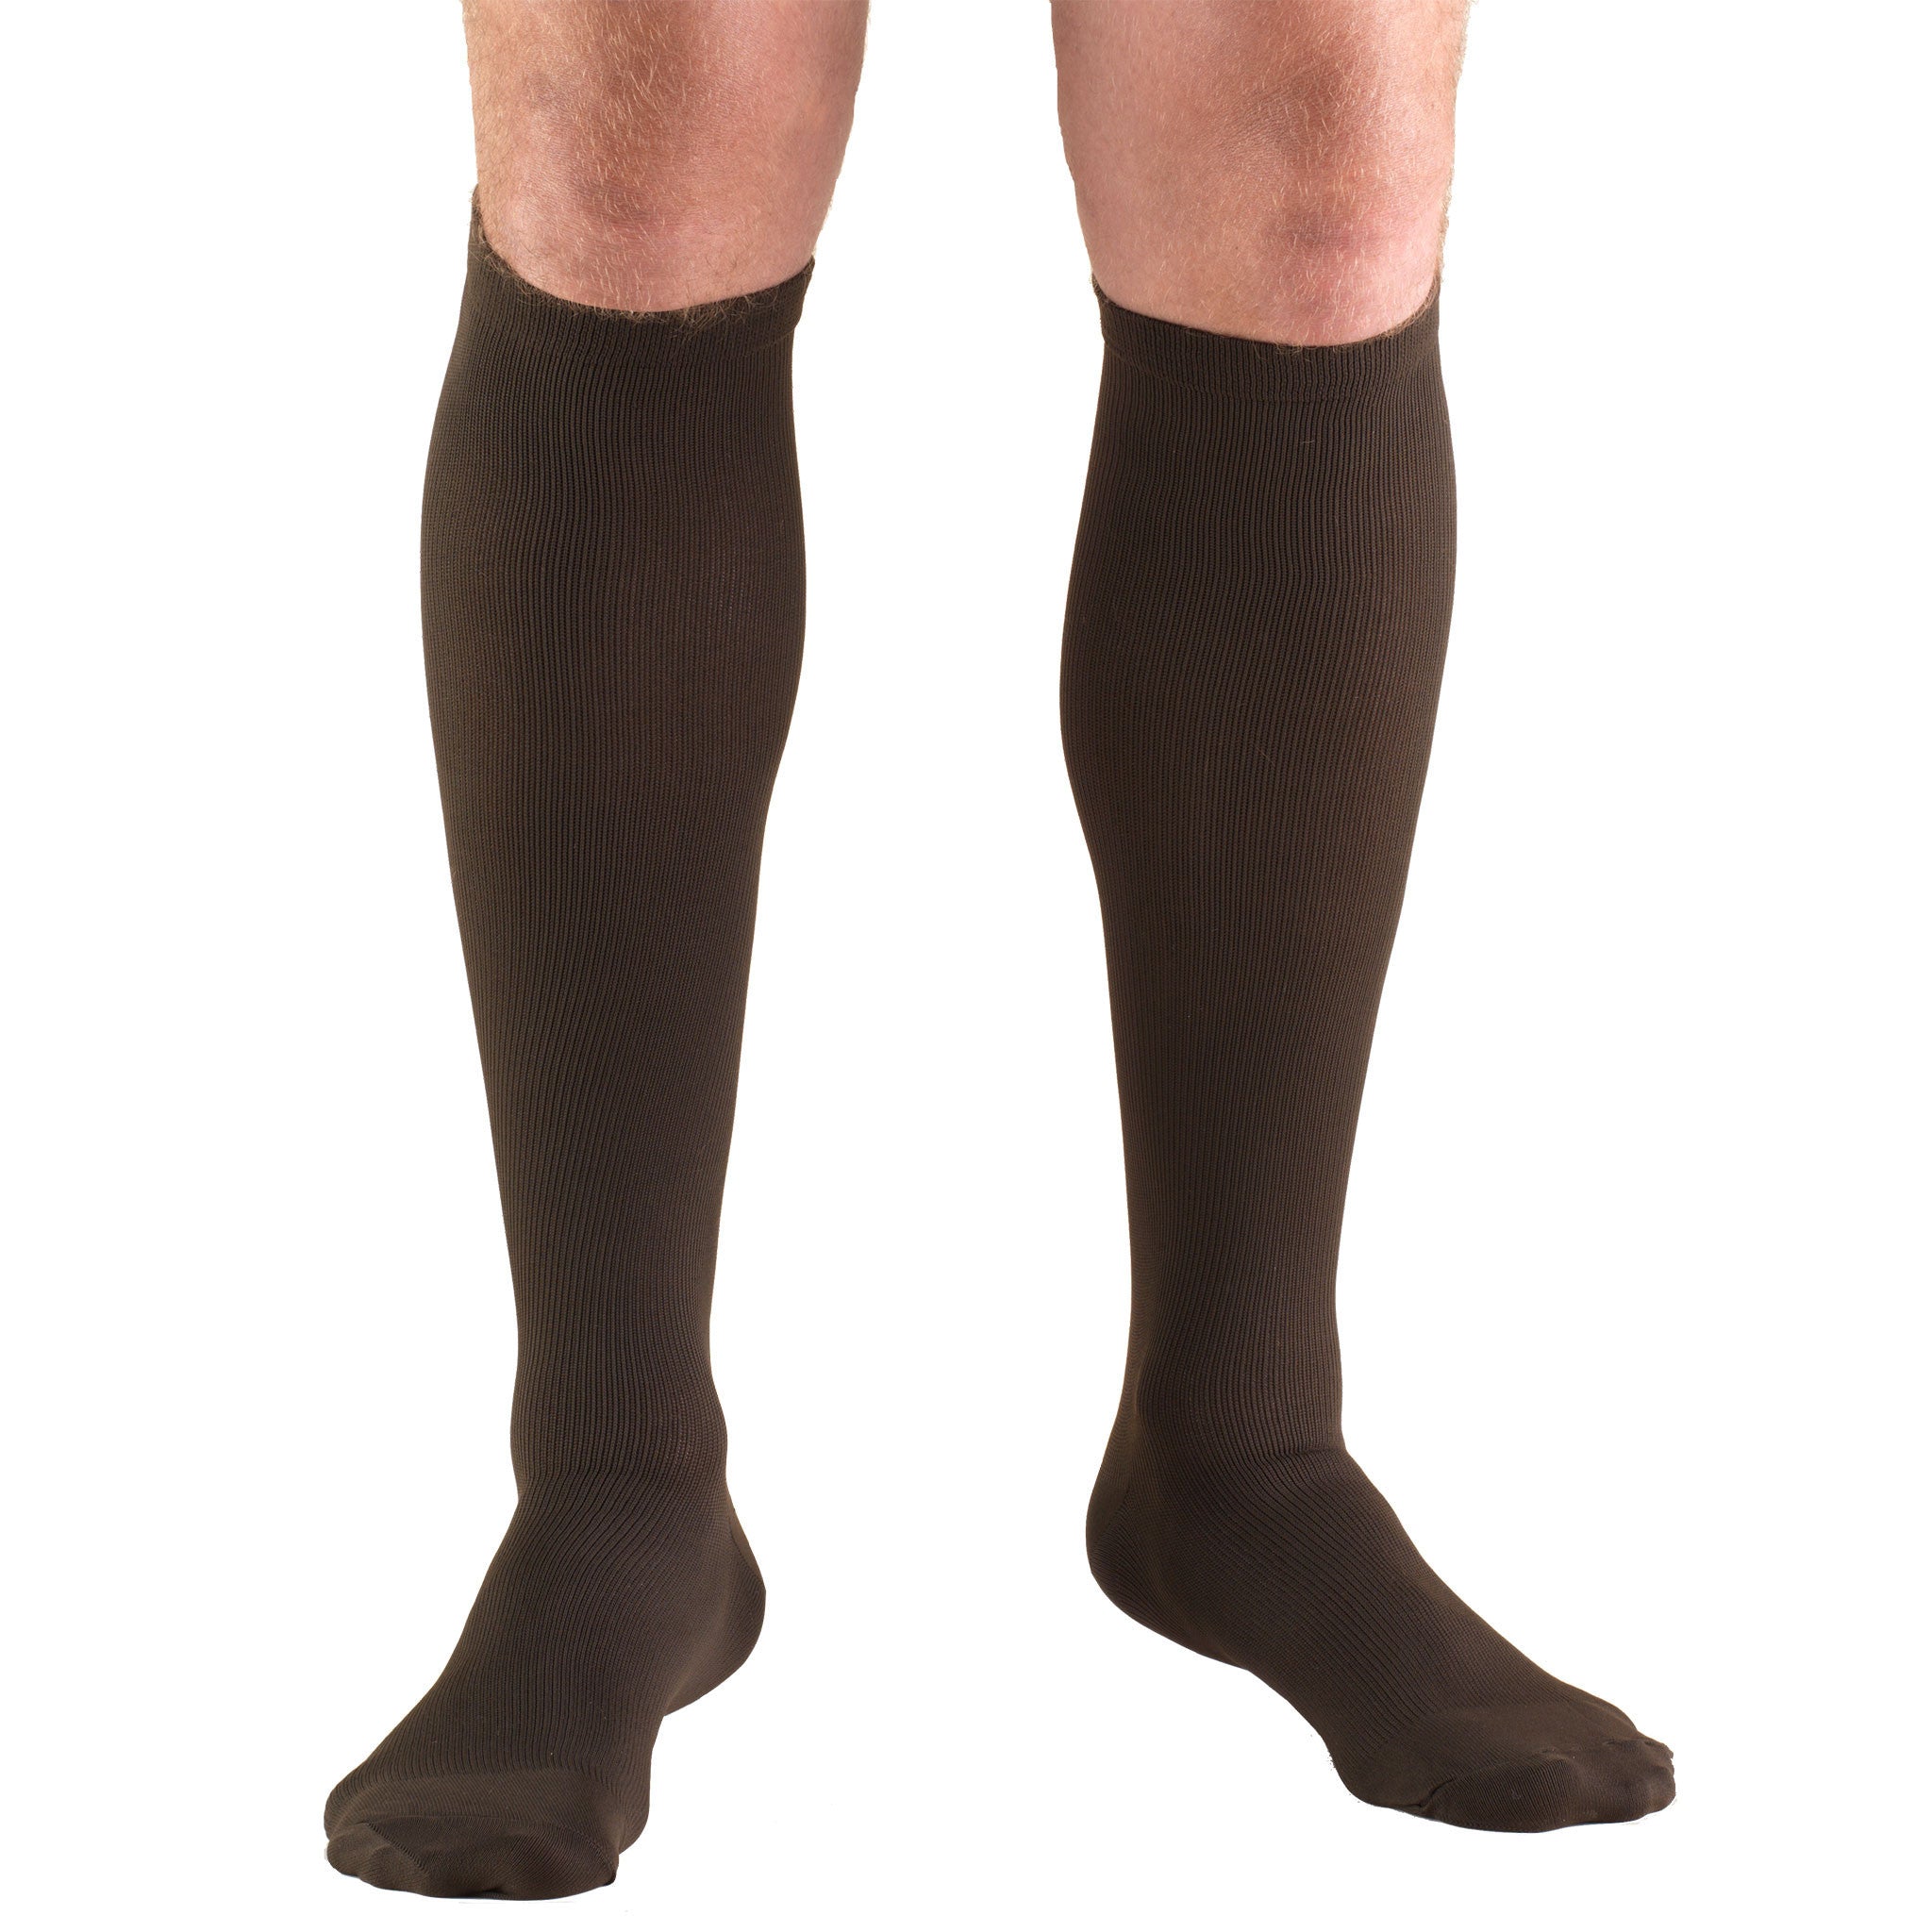  Truform Sheer Compression Stockings, 15-20 mmHg